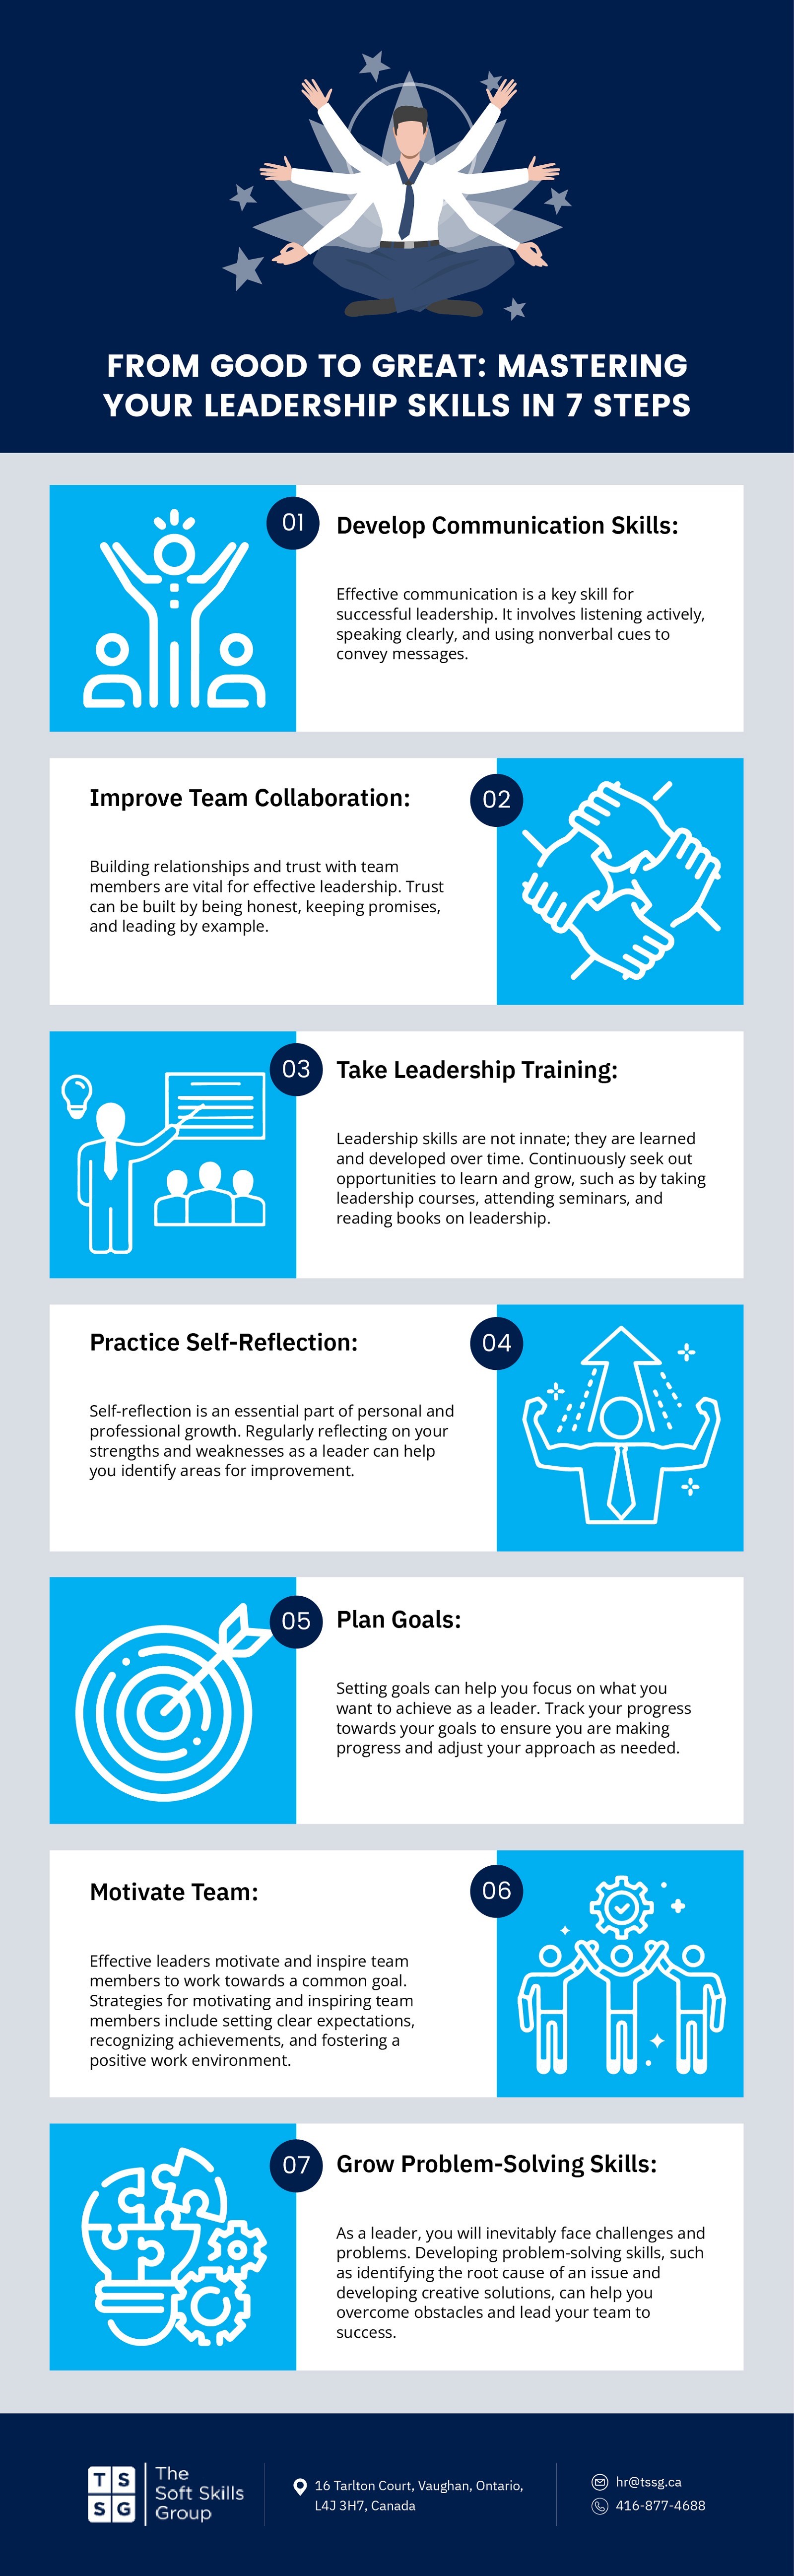 How to Improve Leadership Skills